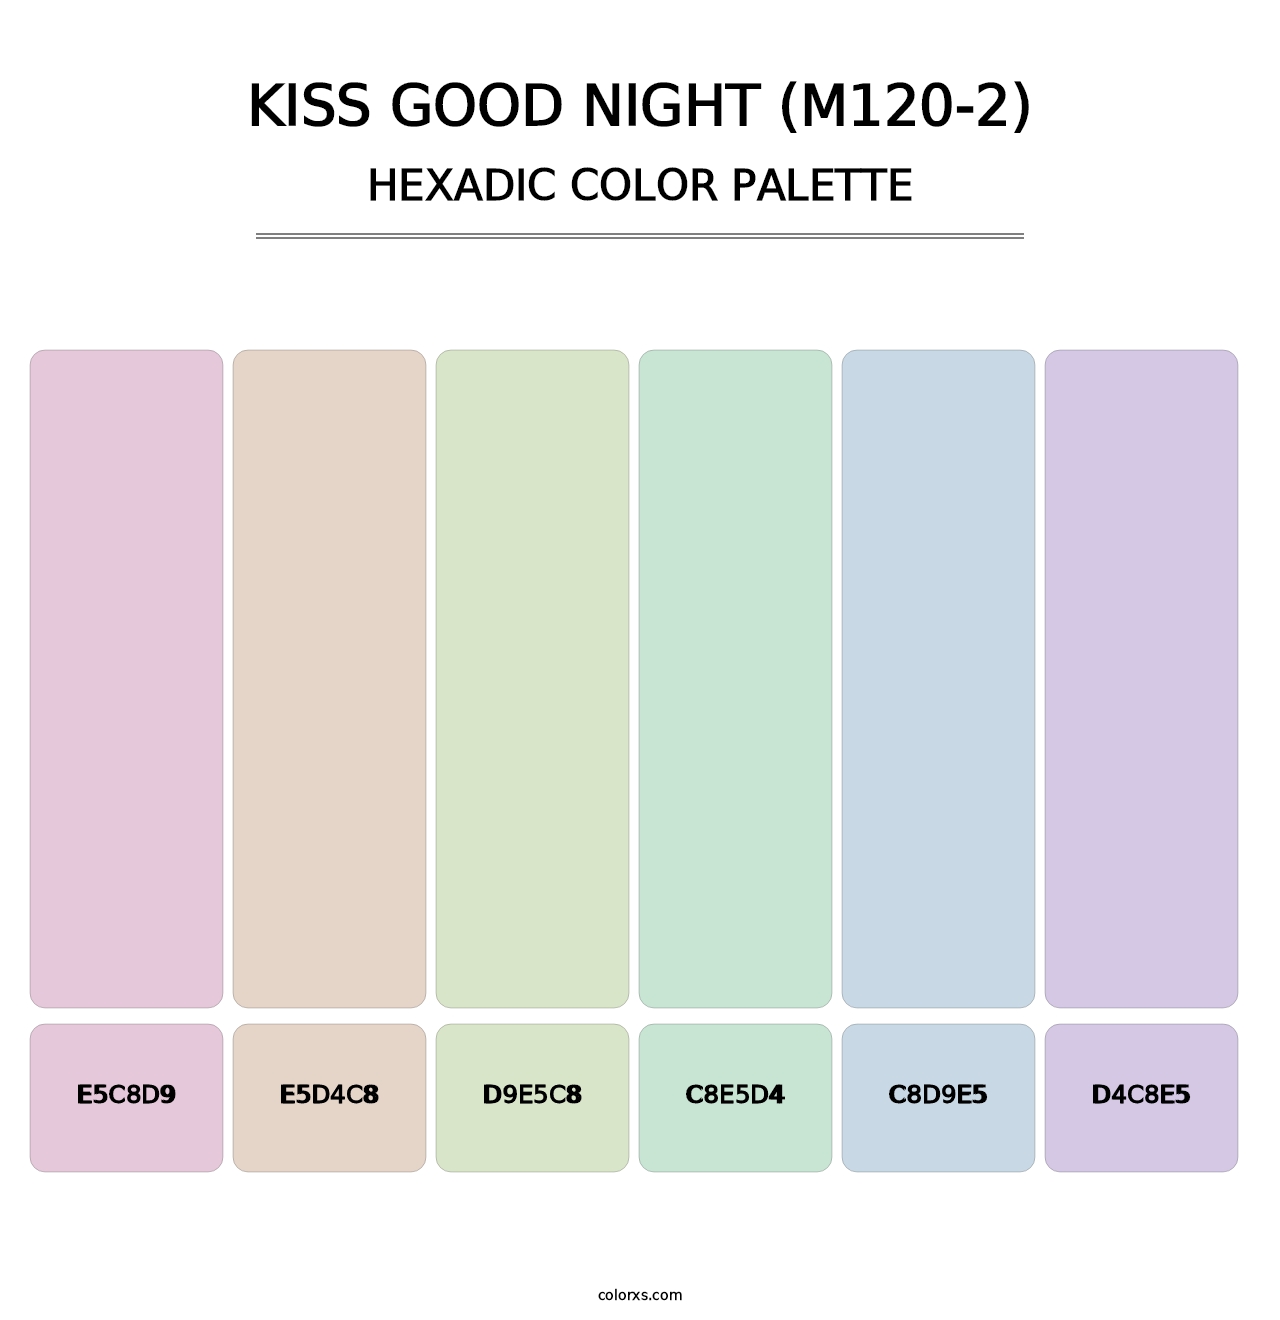 Kiss Good Night (M120-2) - Hexadic Color Palette